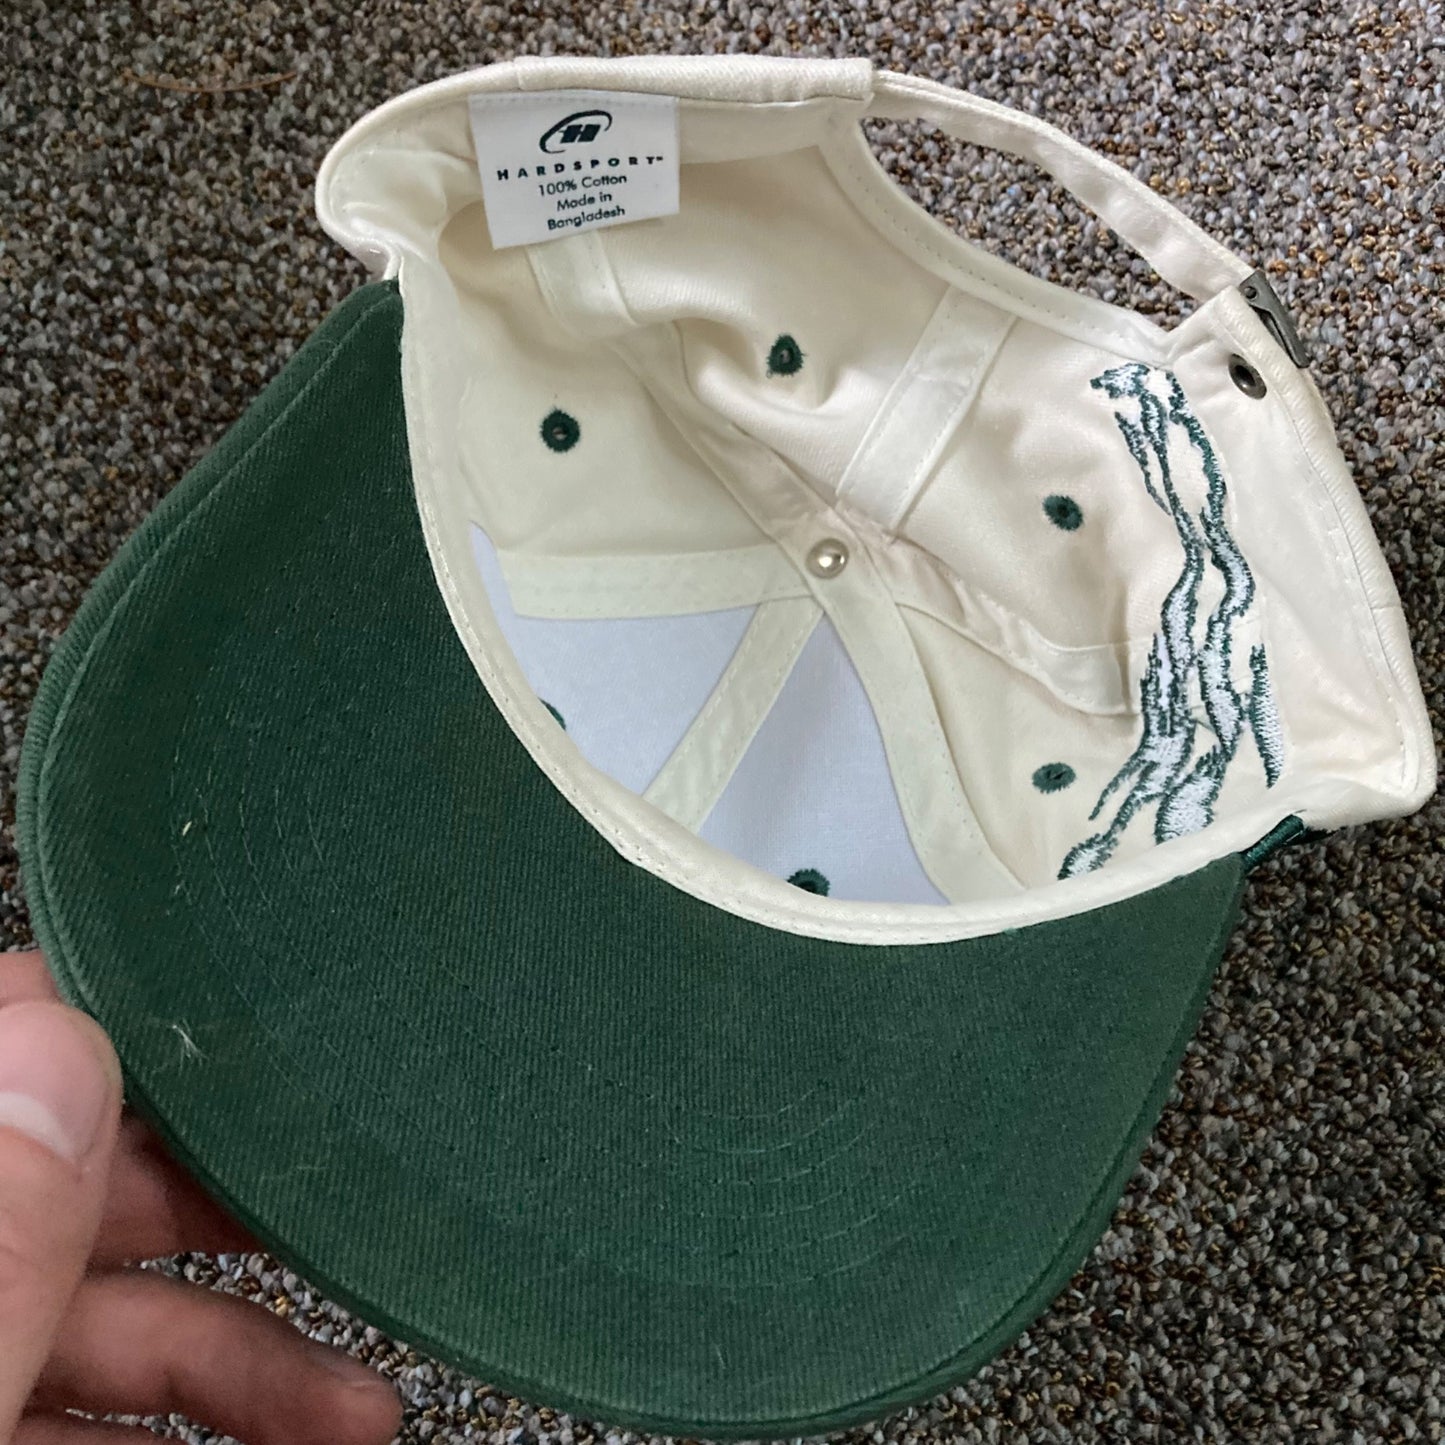 Daytona International Speedway NASCAR Driver Autographed Hat Baseball Cap